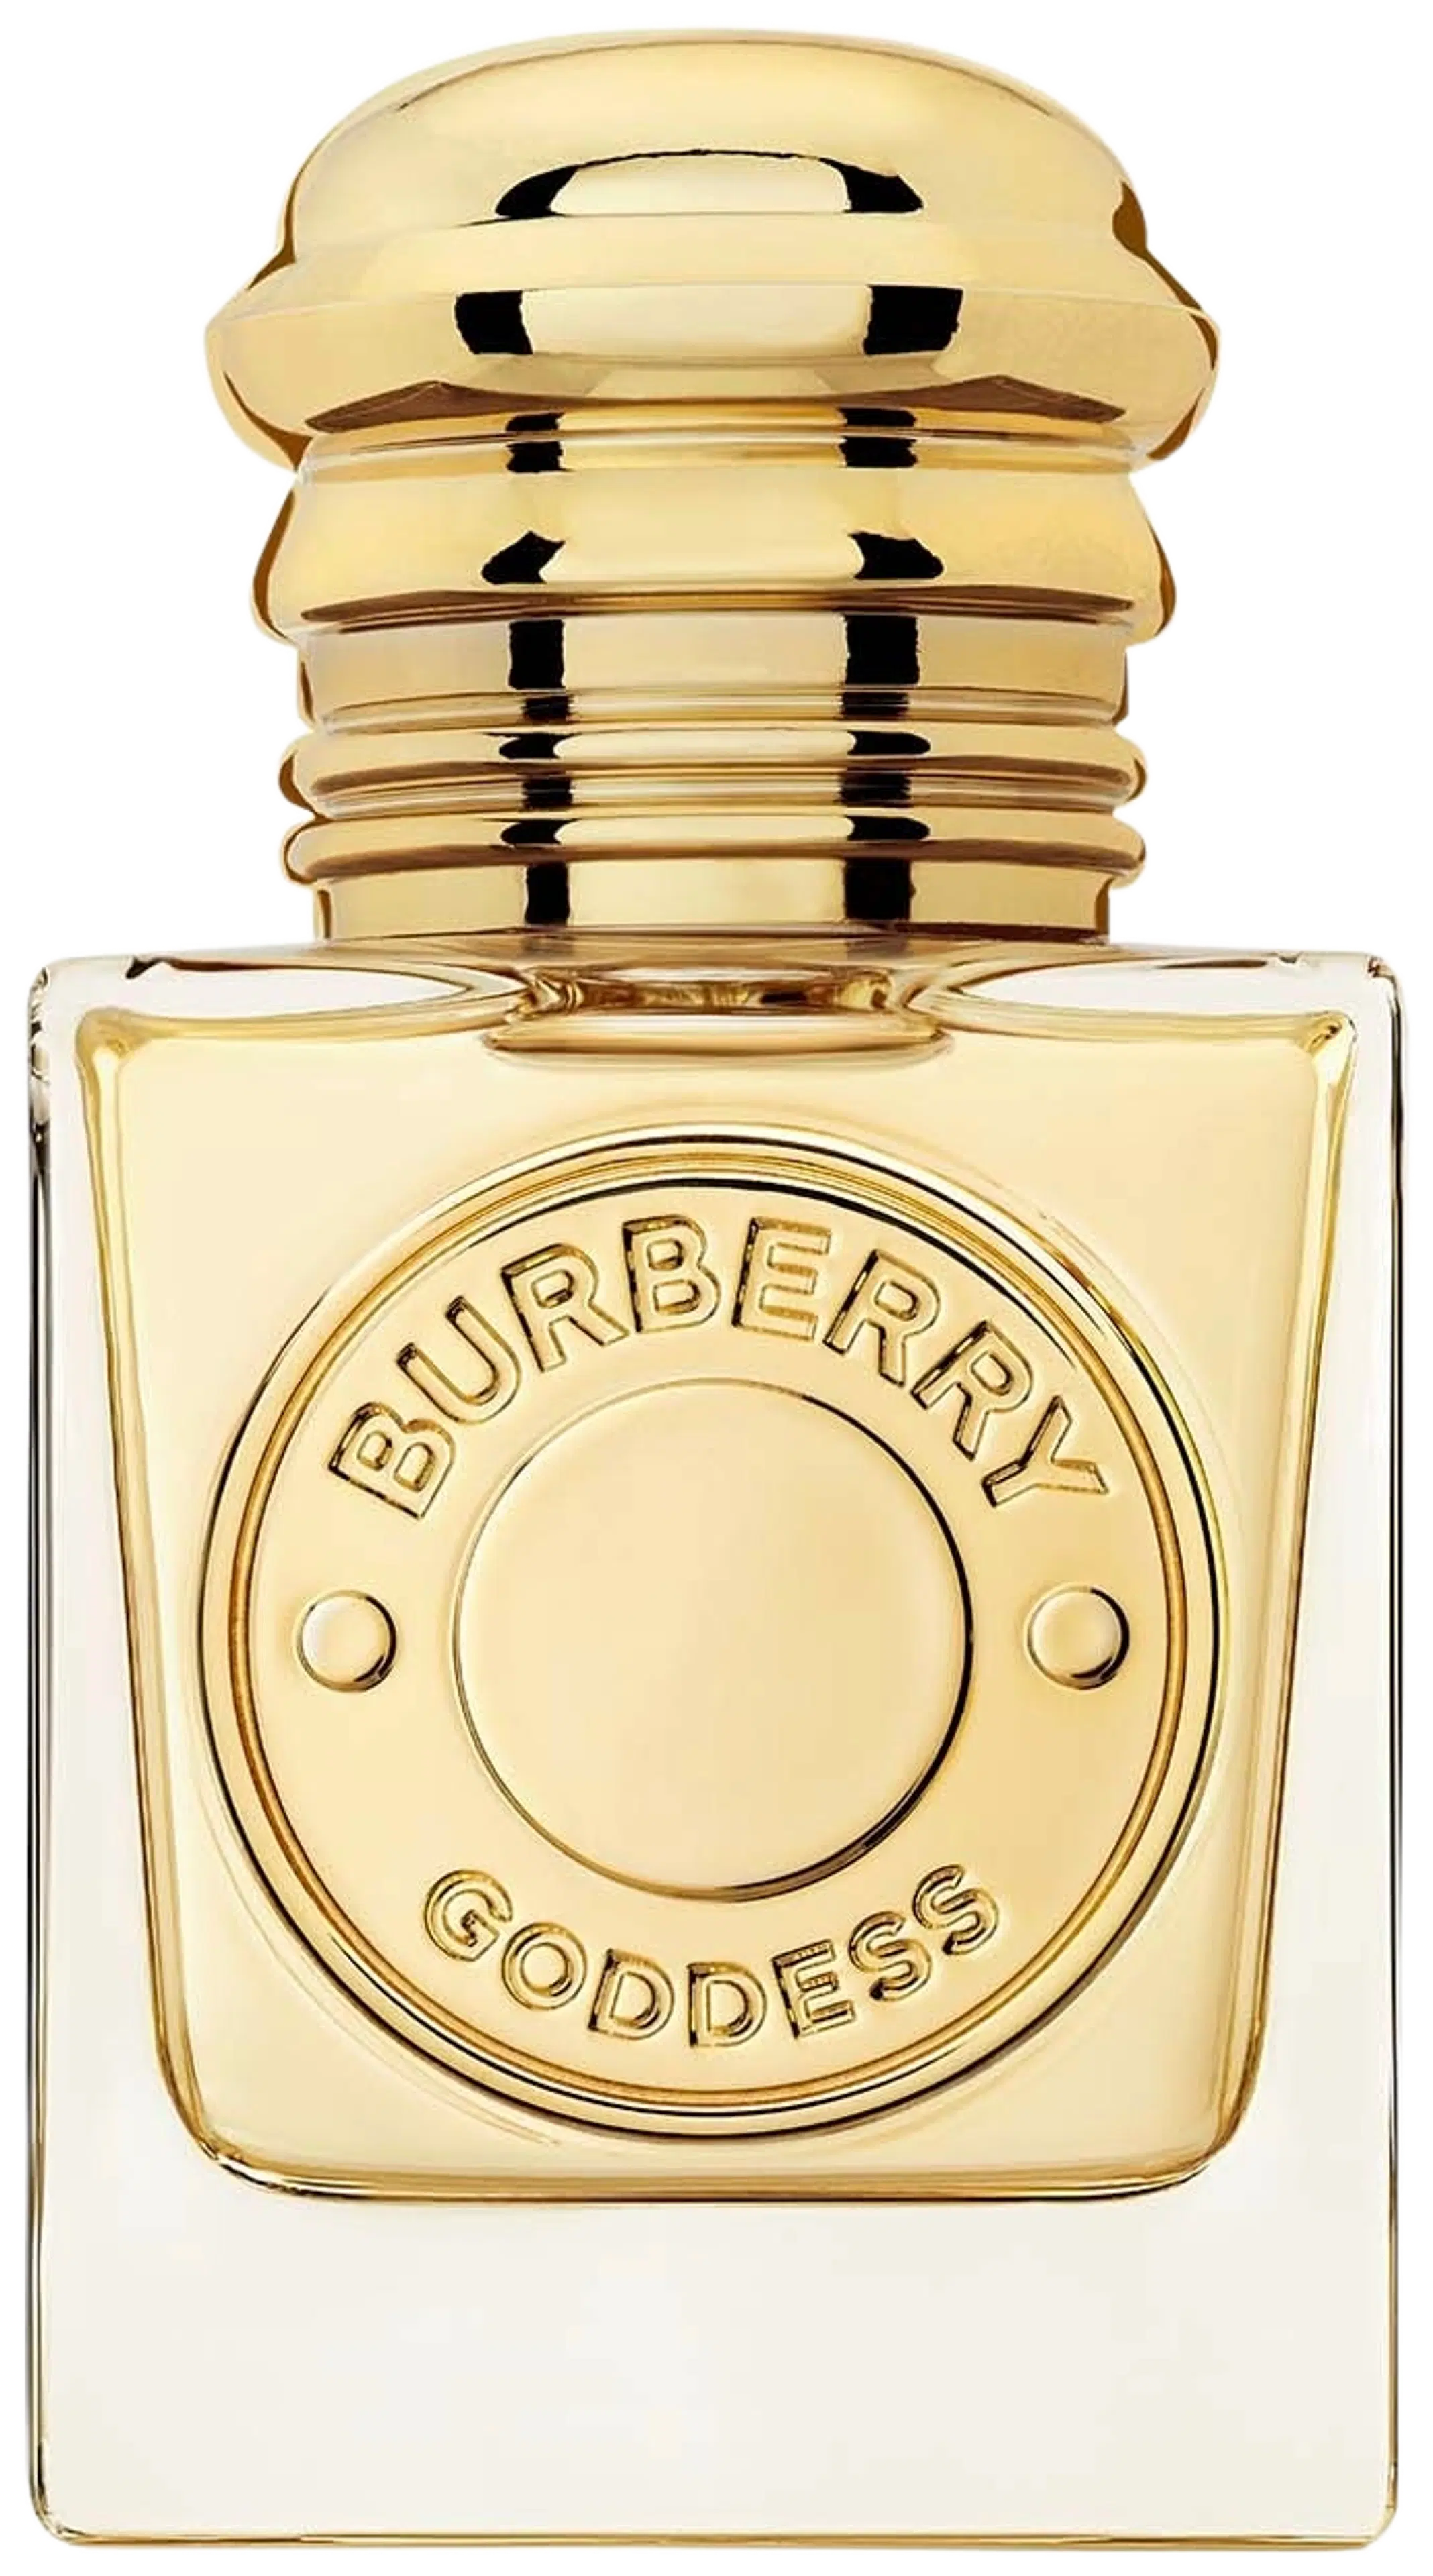 Burberry Goddess EdP tuoksu 30 ml